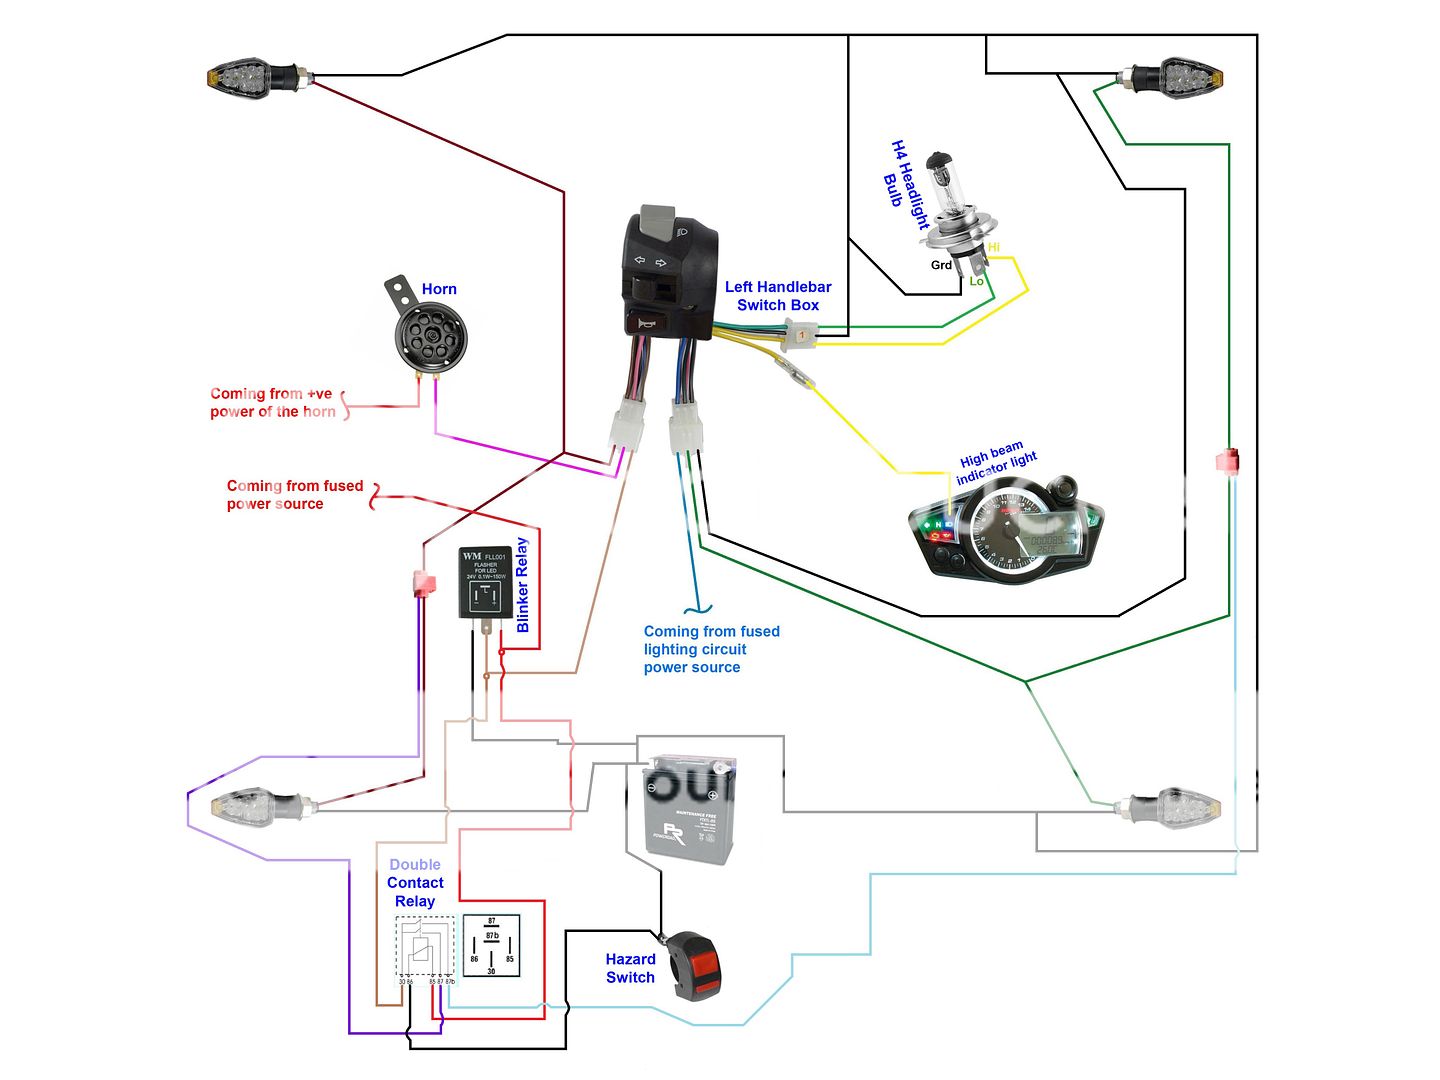 Diagram Turn Signal Kit Wiring Diagram Full Version Hd Quality Wiring Diagram Suddendiagramcommon Monteneroweb It